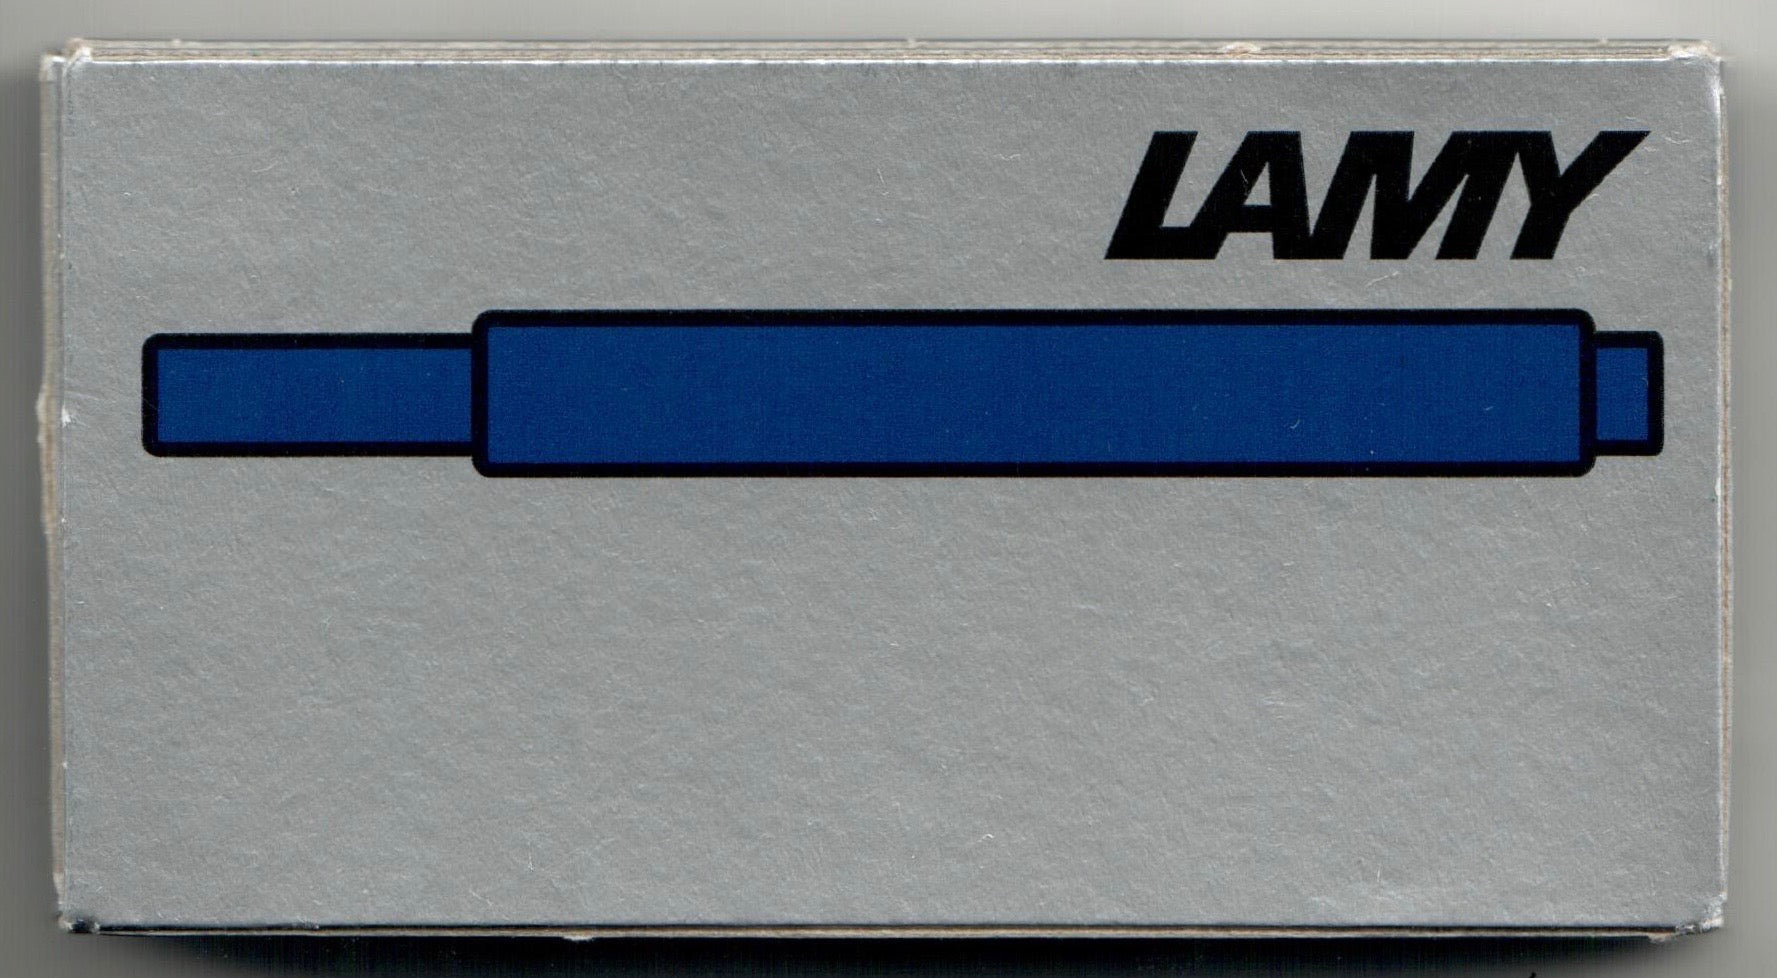 Lamy Ink Cartridge Box T10